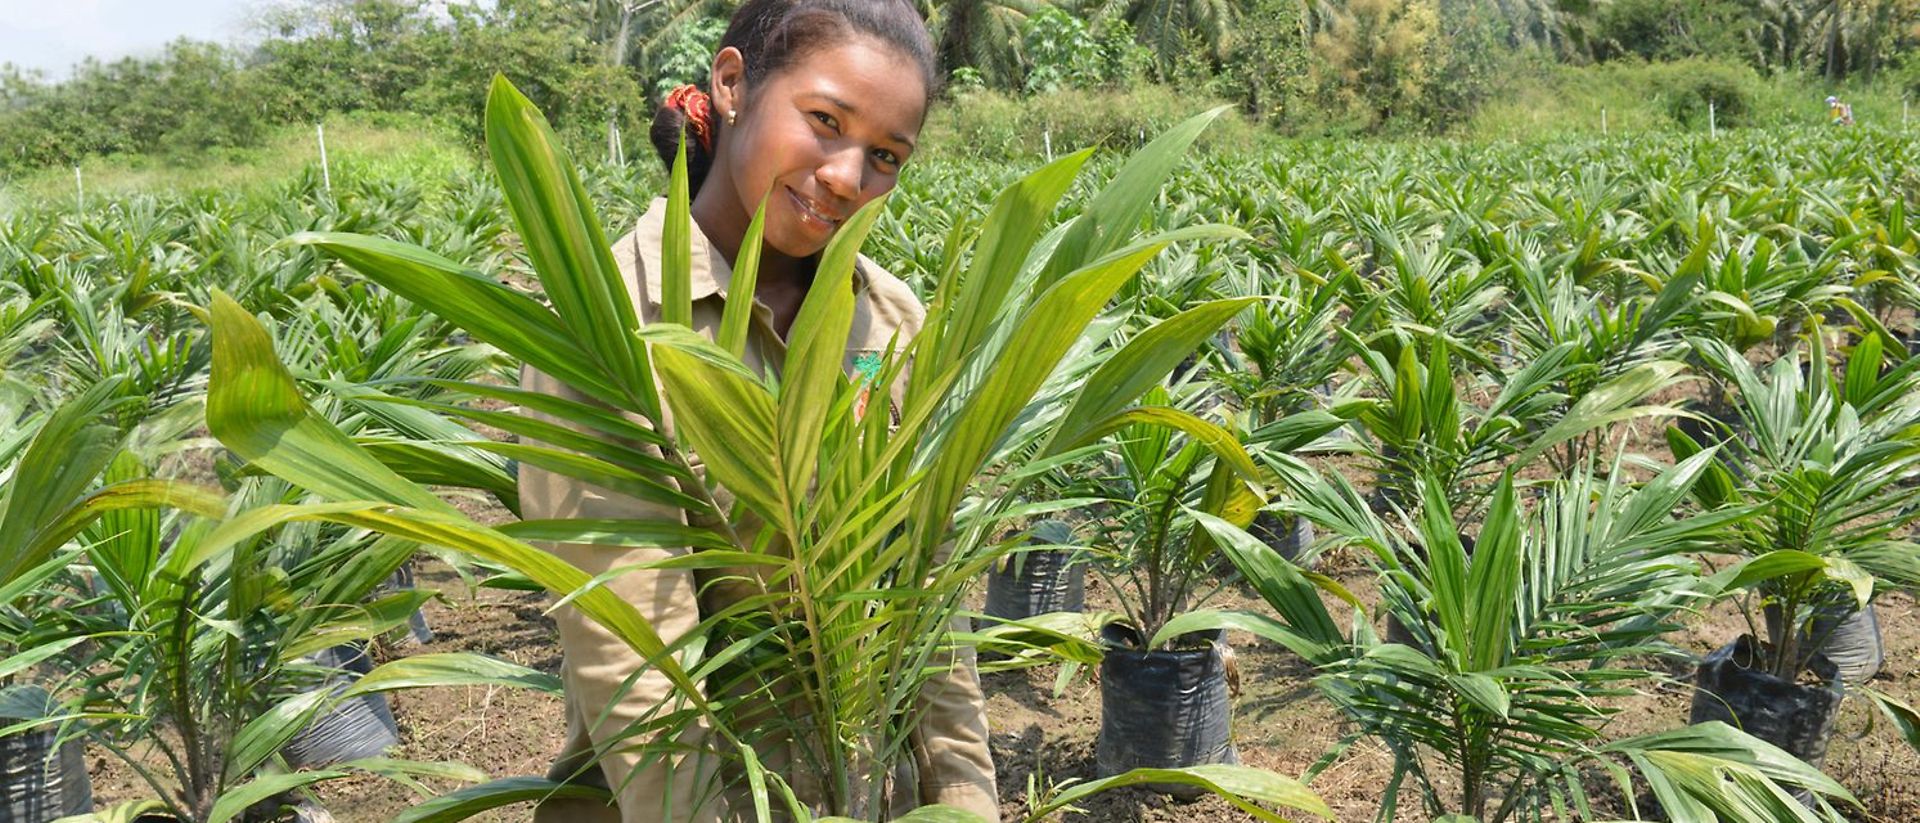 Women with dark skin in a field of a new planed palm tree field.